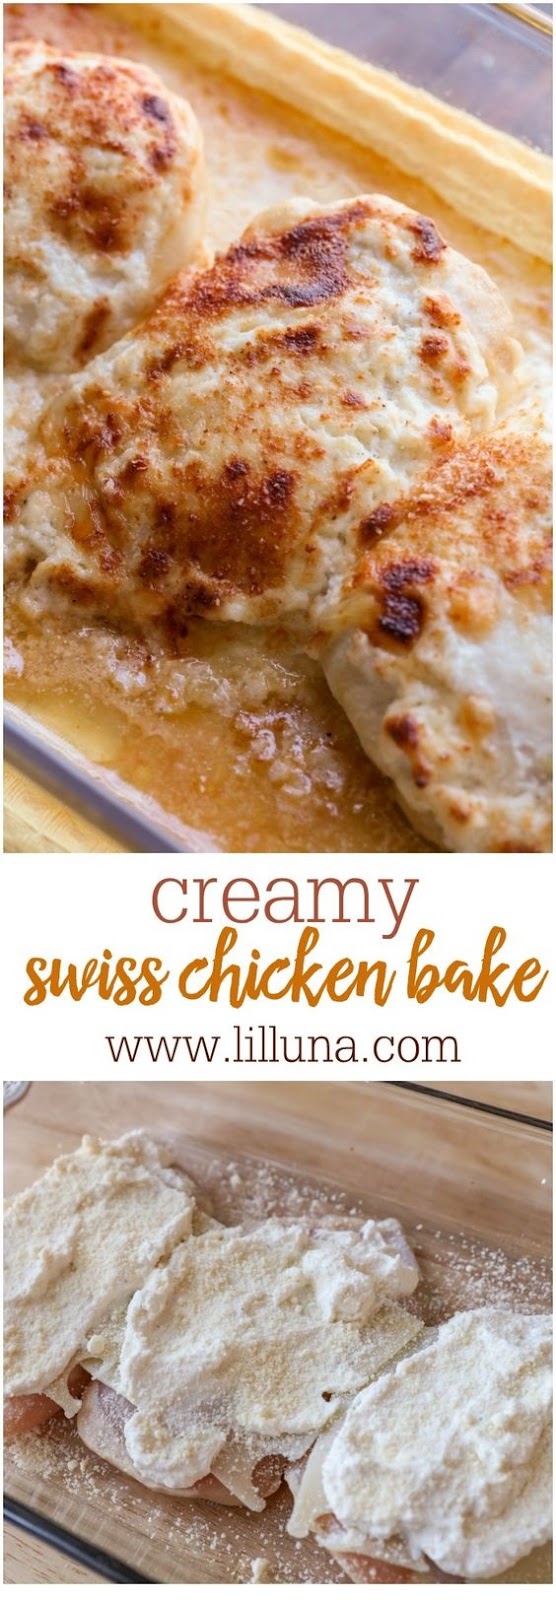 Swiss Chicken Bake Recipe